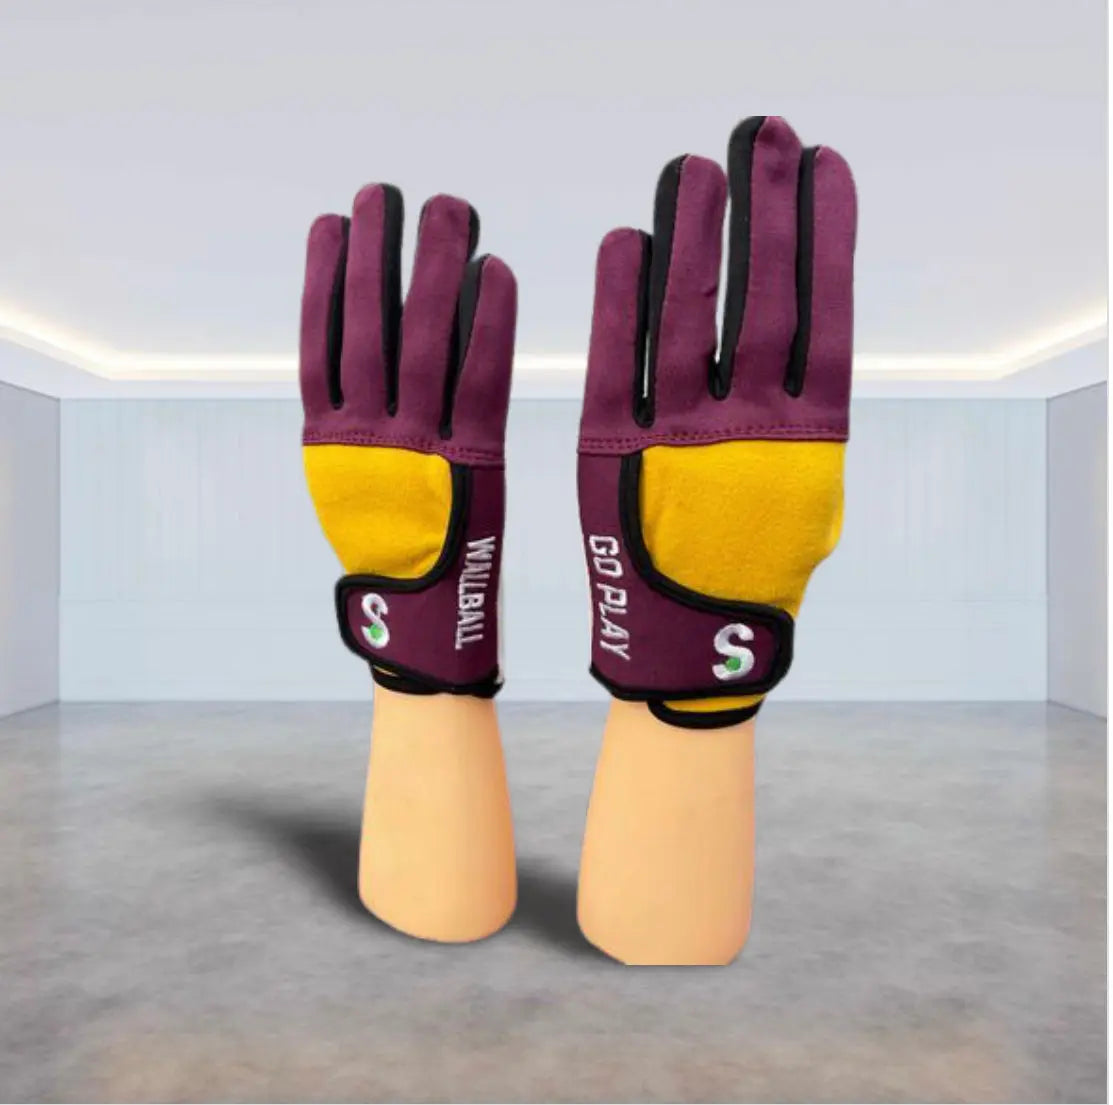 KOTC PRO Gloves Burgundy/ Gold Unpadded - New York Handball Store Corp